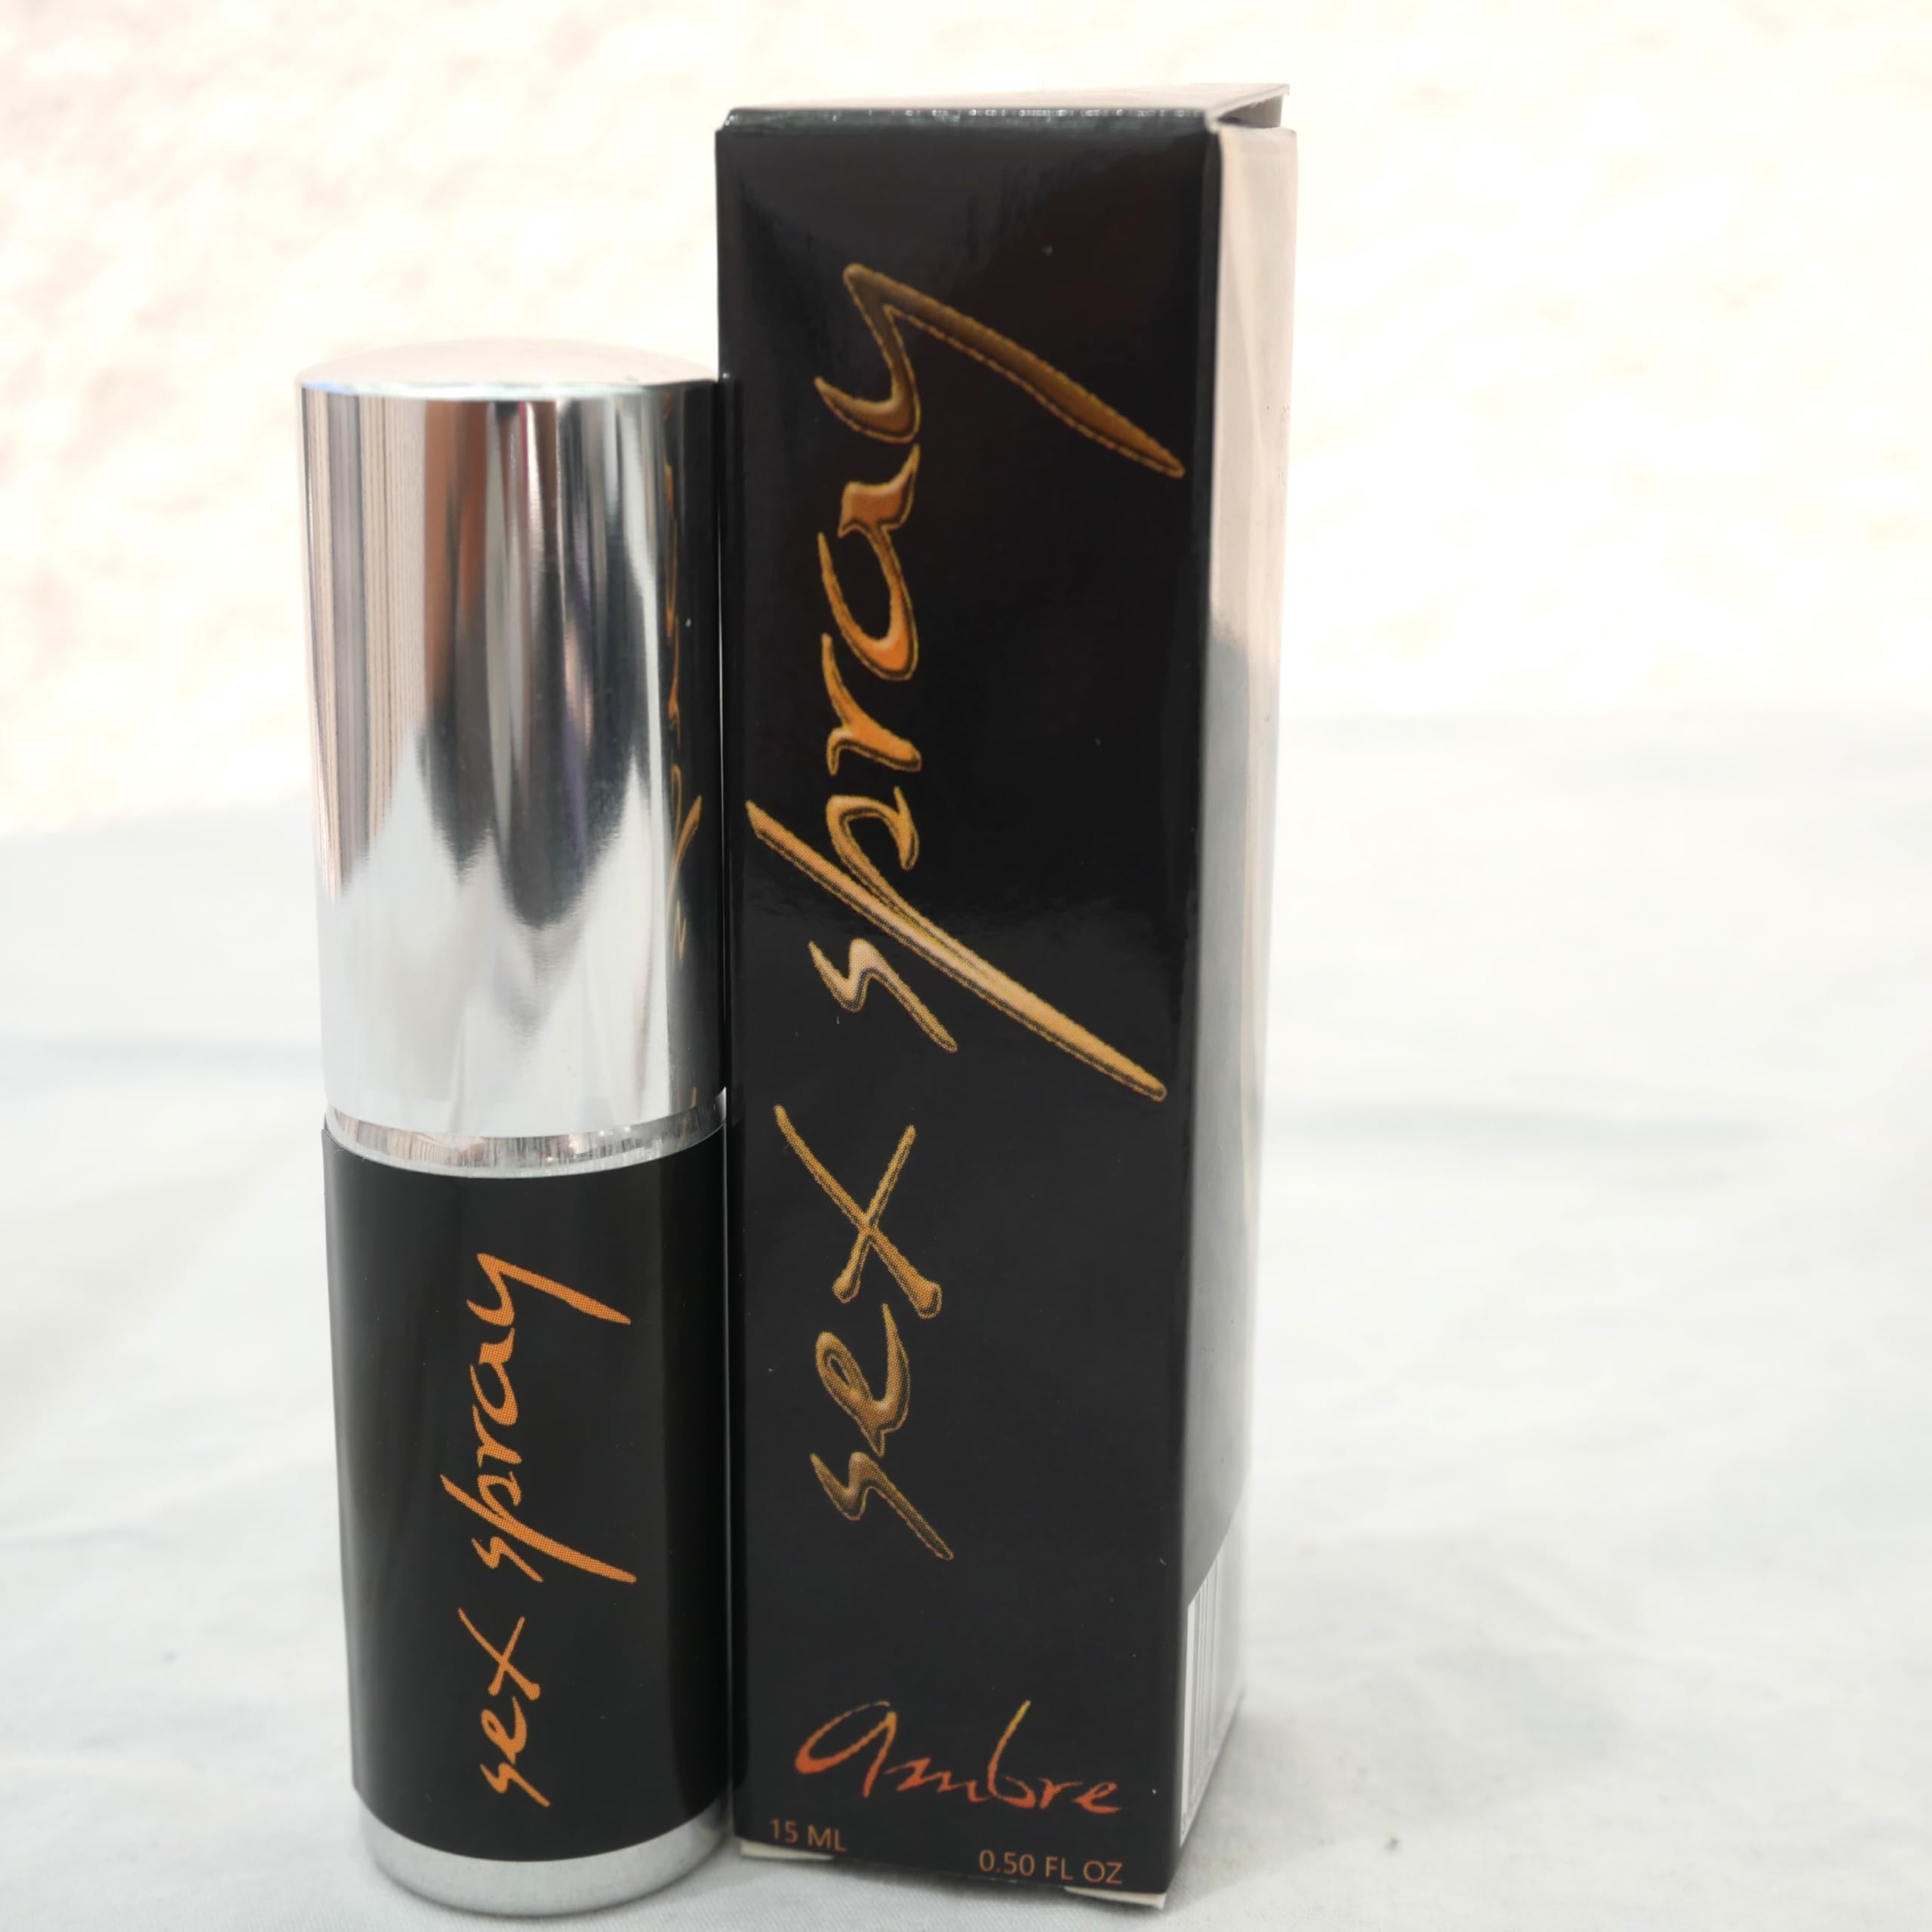 Spray sex Pheromone perfume cologne fragance for men to attract women long lasting 0.5 fl oz / 15ml…